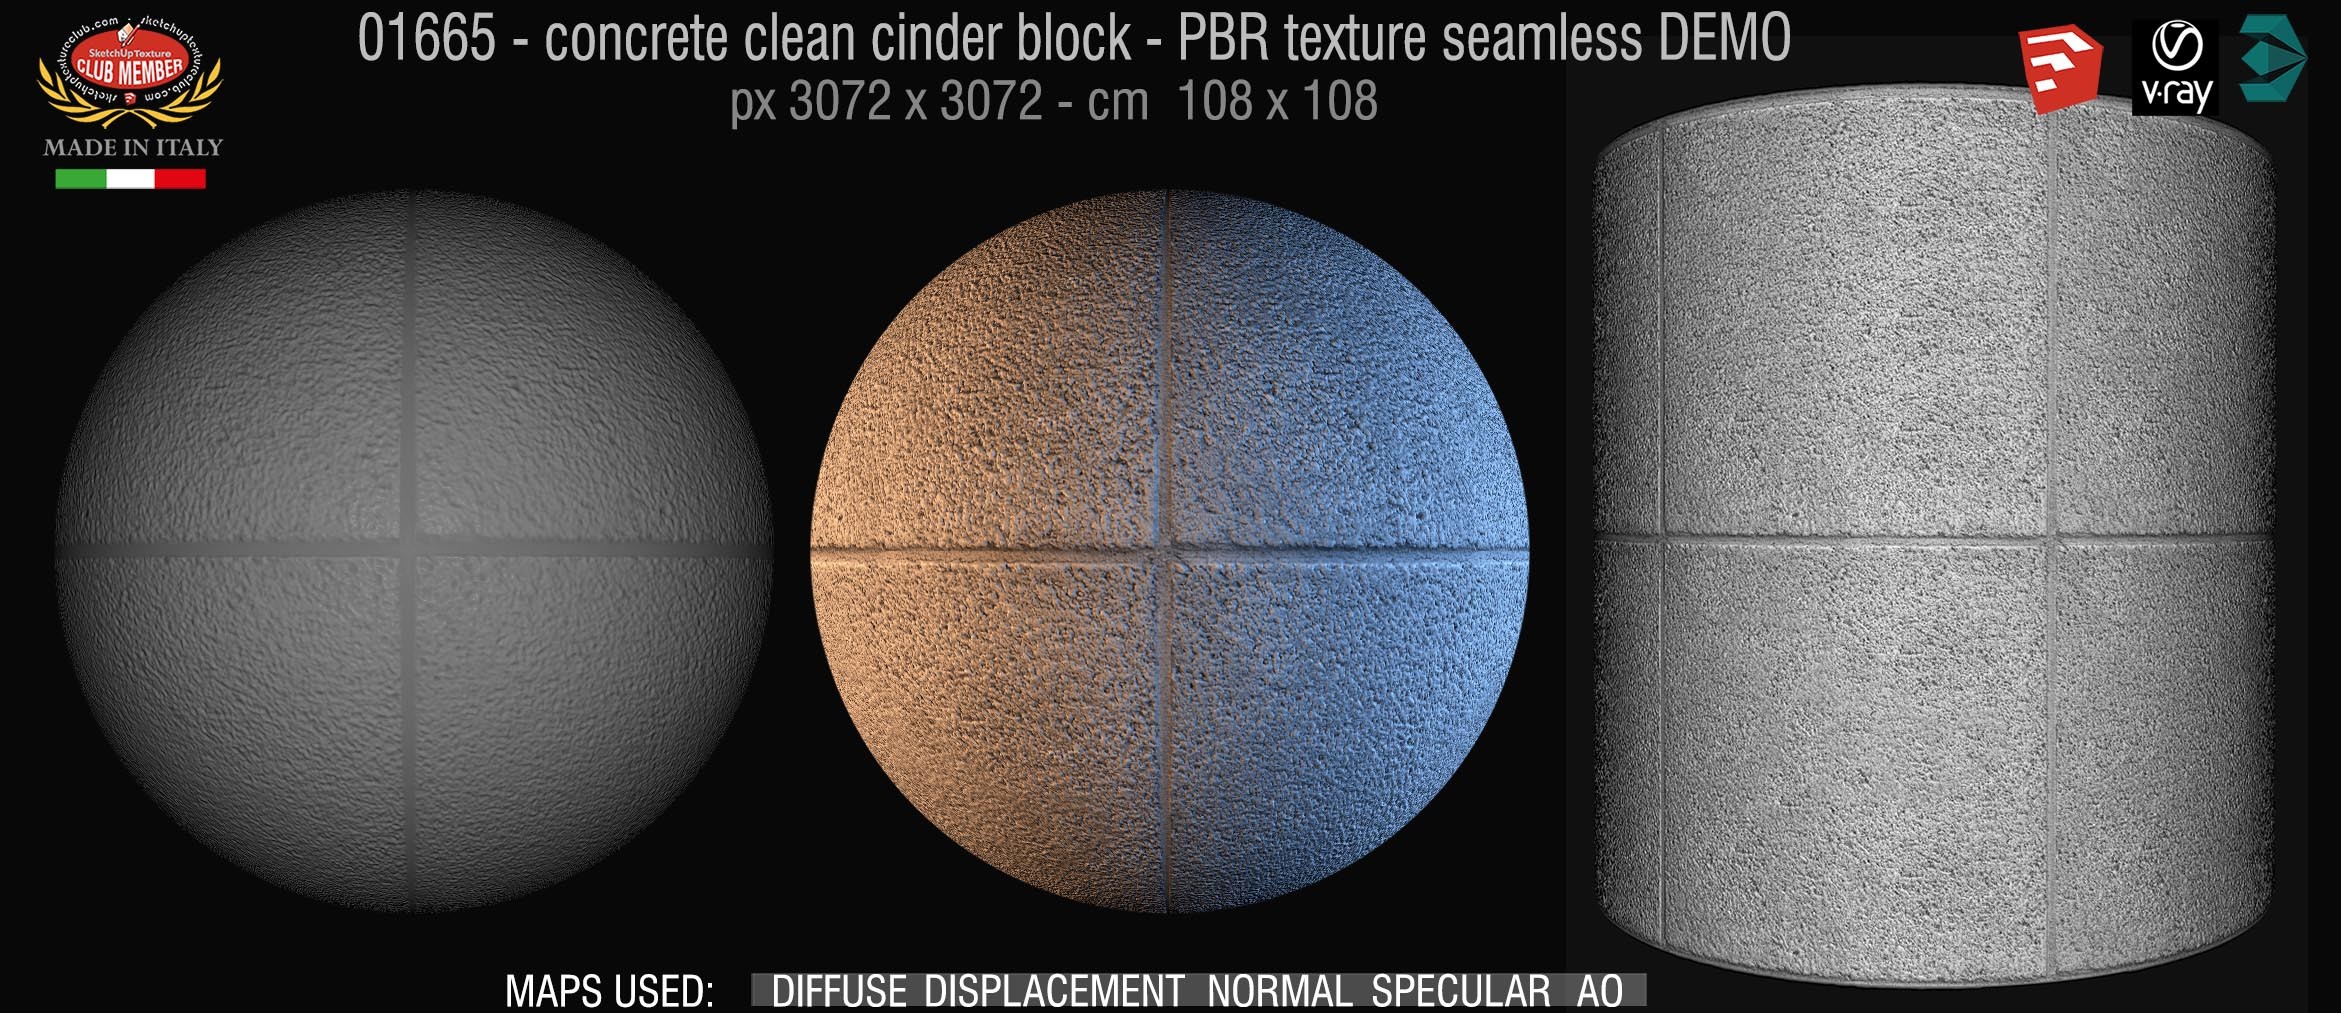 01665 concrete clean cinder block PBR texture seamless DEMO